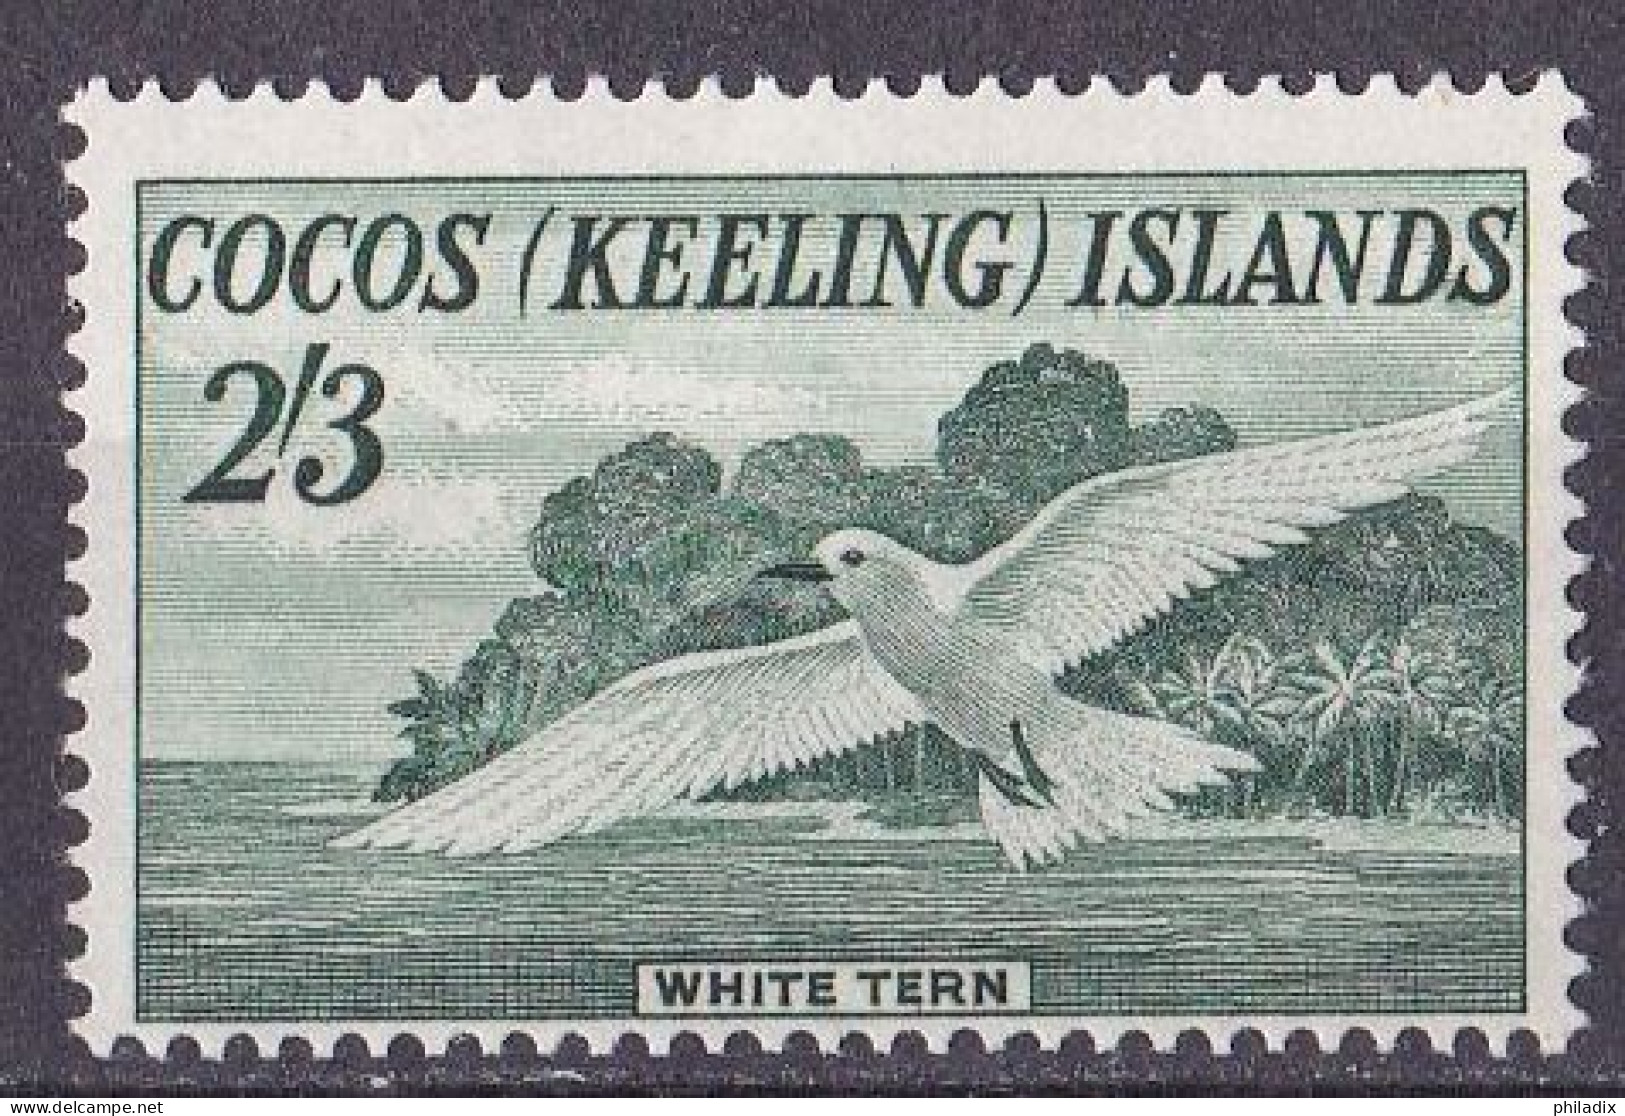 Kokosinseln (Keeling Island) Marke Von 1963 **/MNH (A5-9) - Cocoseilanden